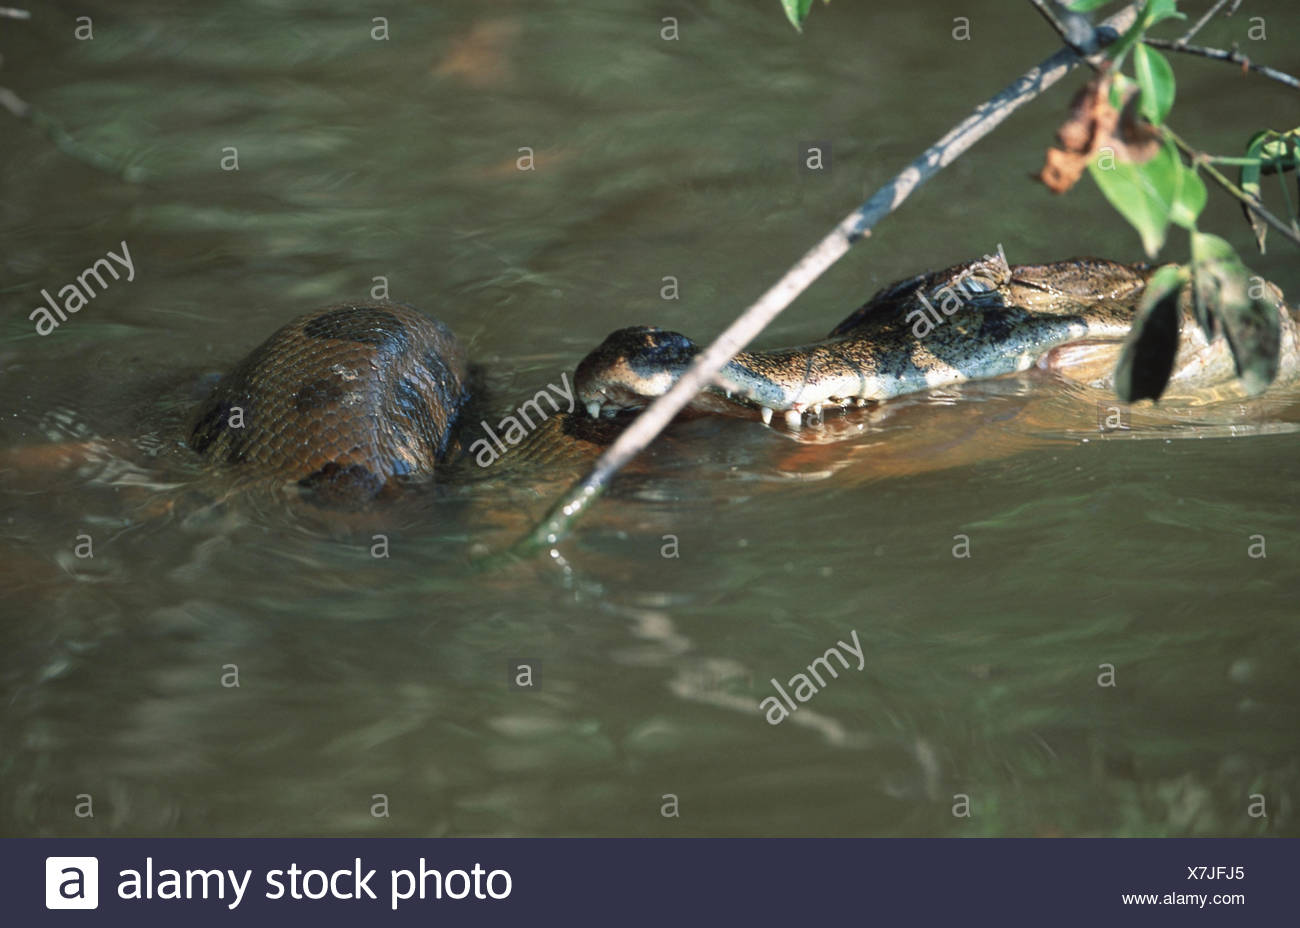 Anaconda Eating An Alligator